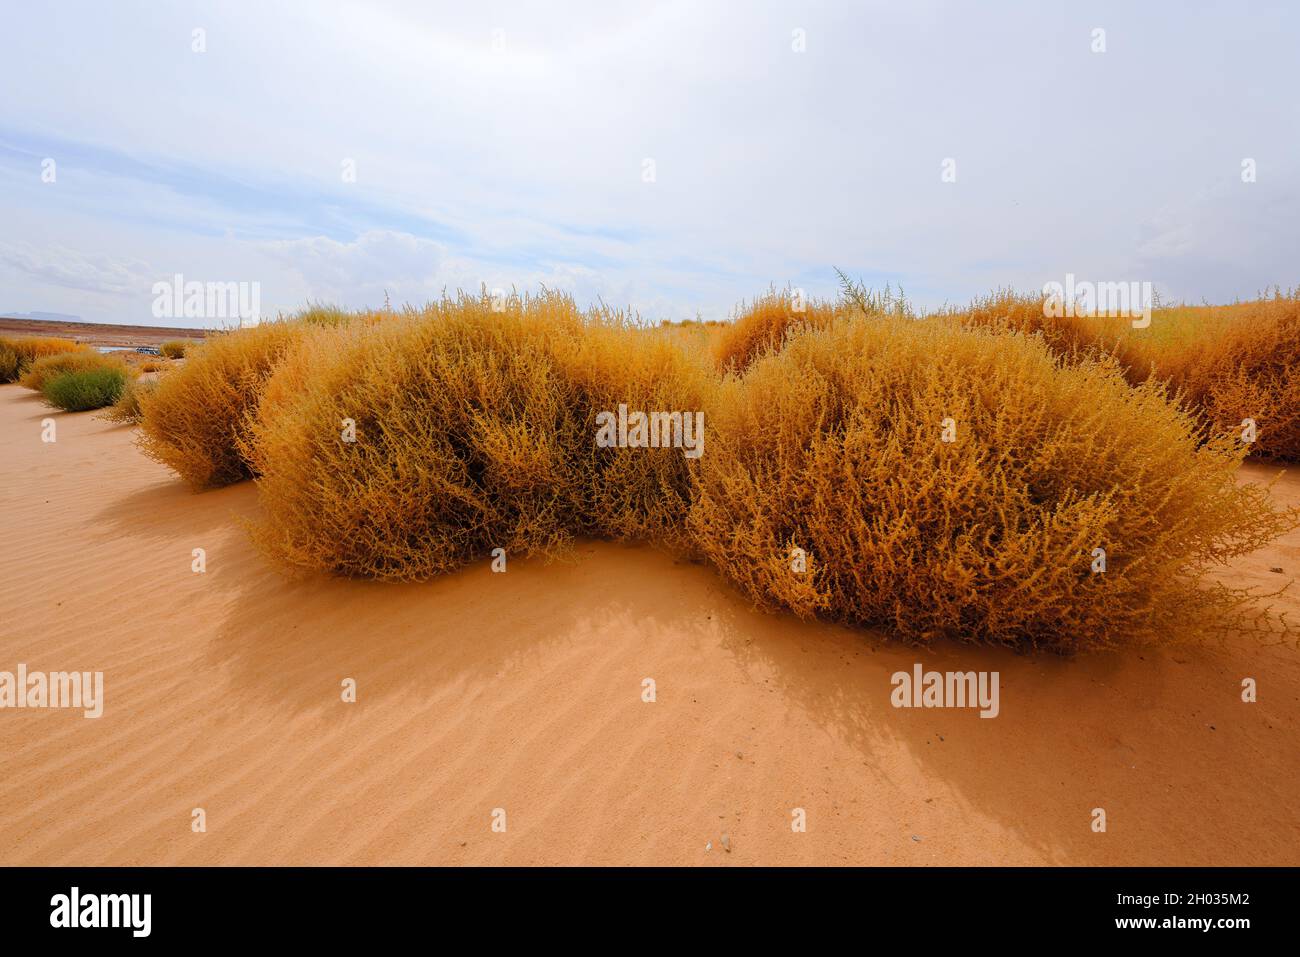 Sand beach and Saltwort plants on the beach, beautiful Fall season. Cloudy sky background, copy space Stock Photo